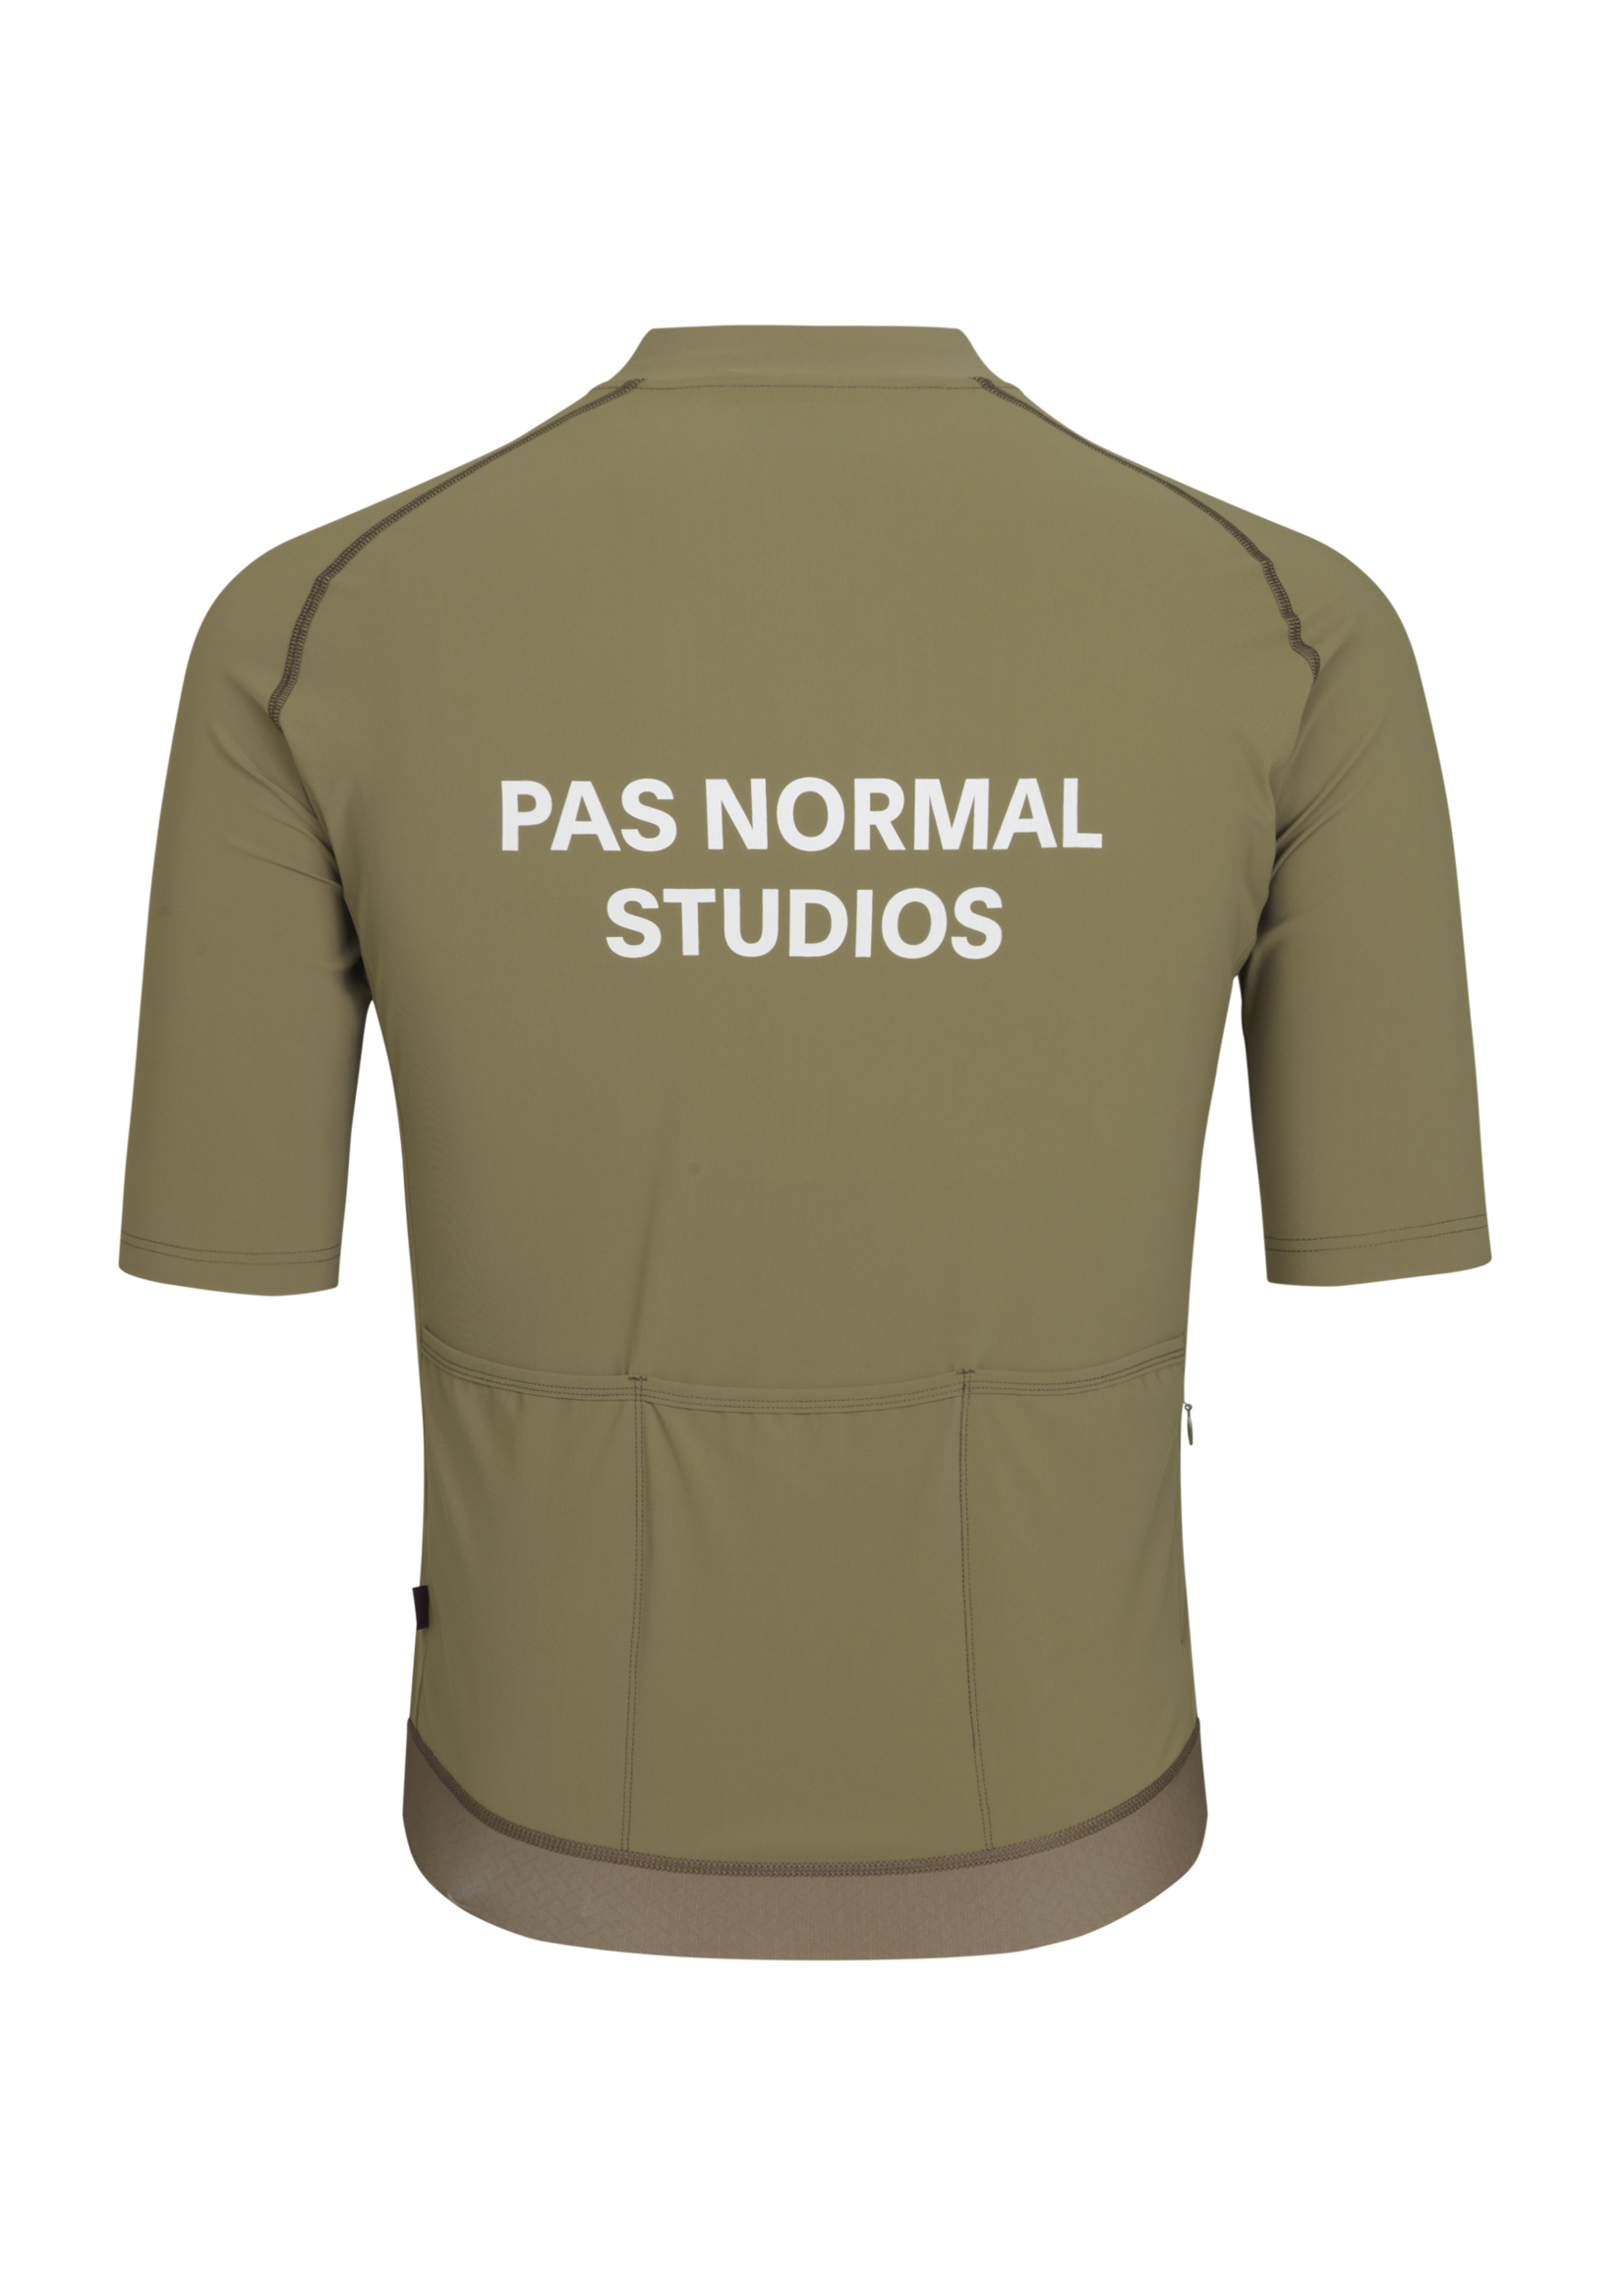 Pas Normal Studios Essential Jersey - Earth